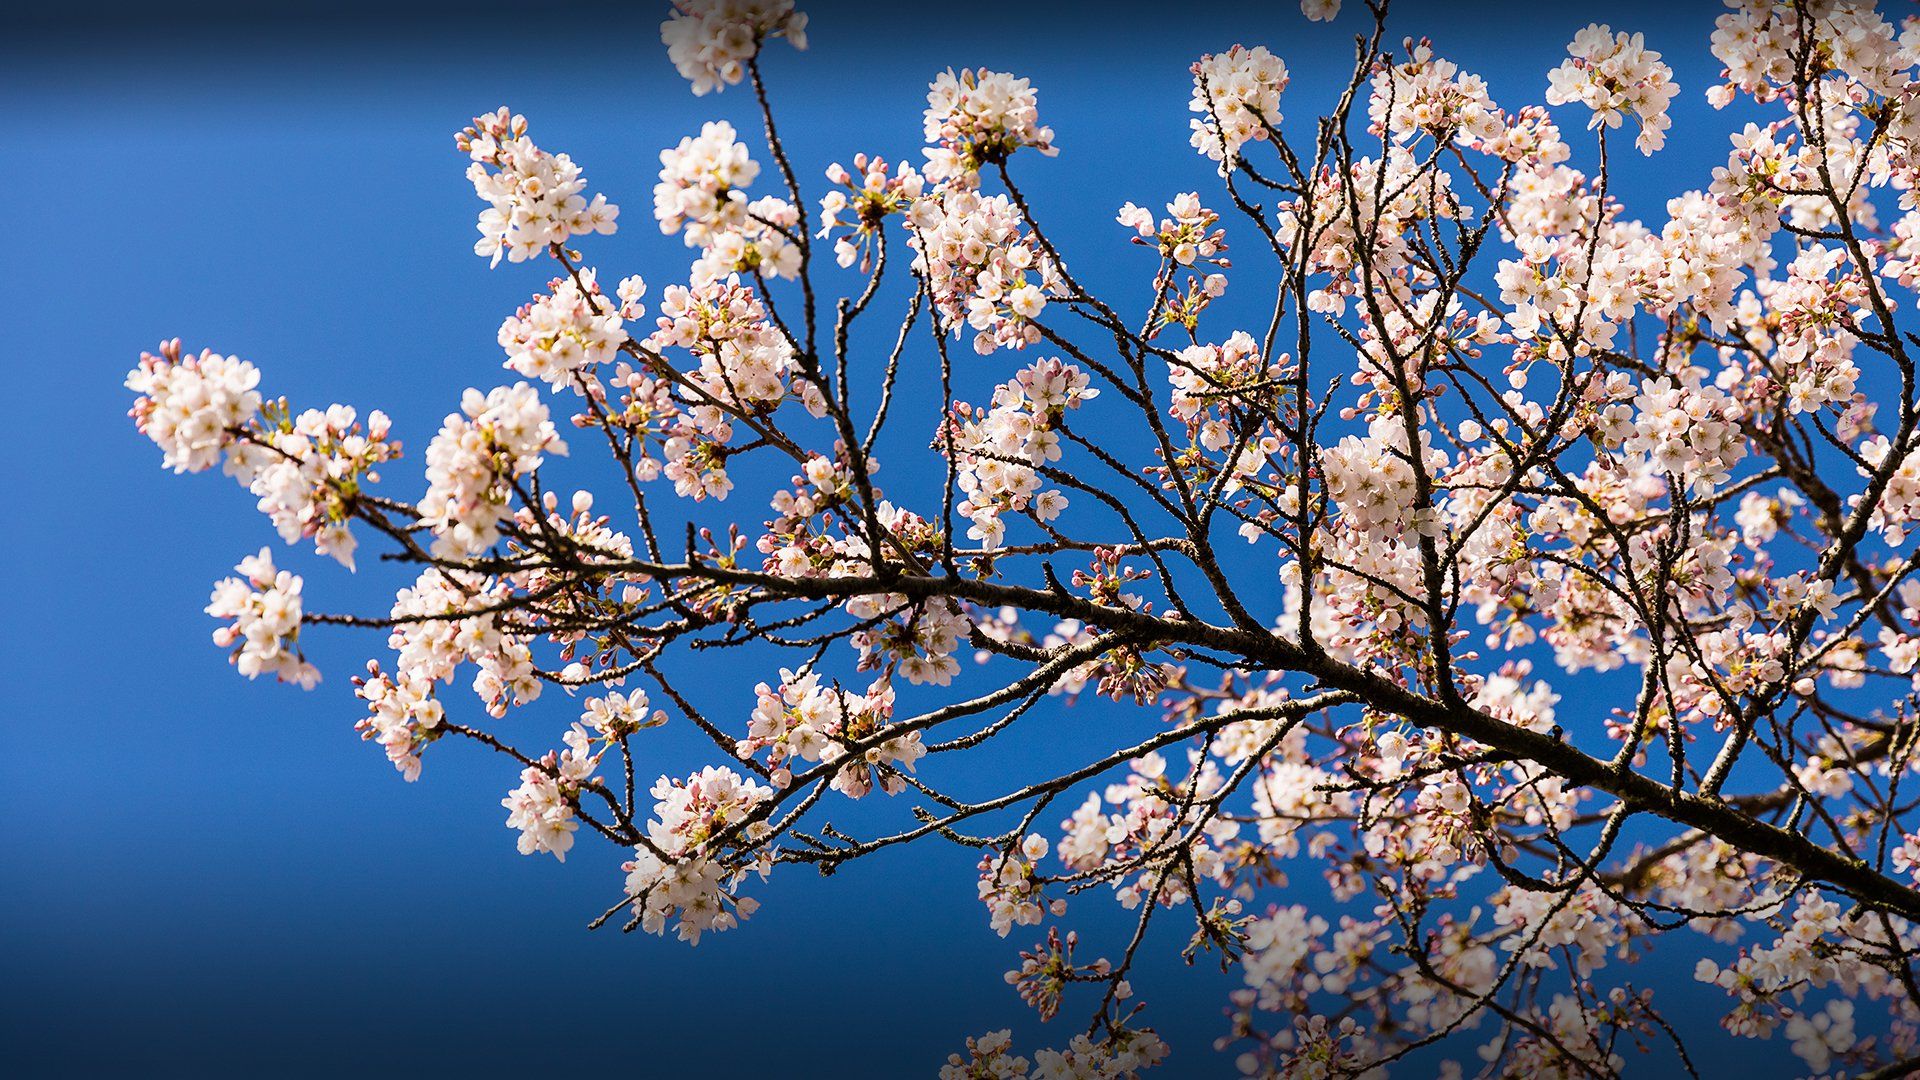 Cherry blossom at spring